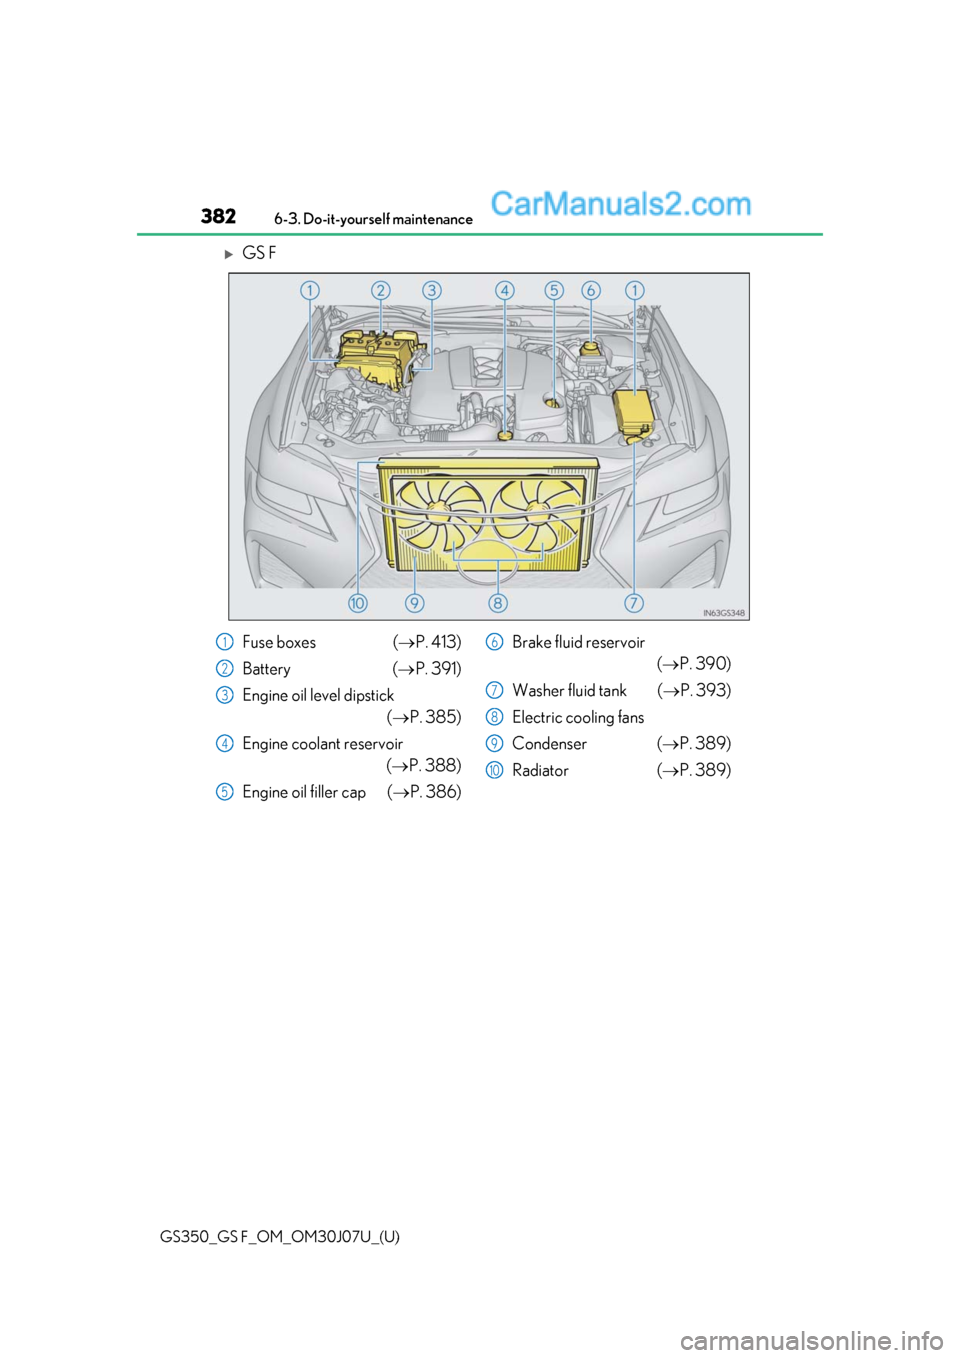 Lexus GS350 2020 Repair Manual 382
GS350_GS F_OM_OM30J07U_(U)6-3. Do-it-yourself maintenance
GS F
Fuse boxes (
P. 413)
Battery ( P. 391)
Engine oil level dipstick (P. 385)
Engine coolant reservoir (P. 388)
Engine oil